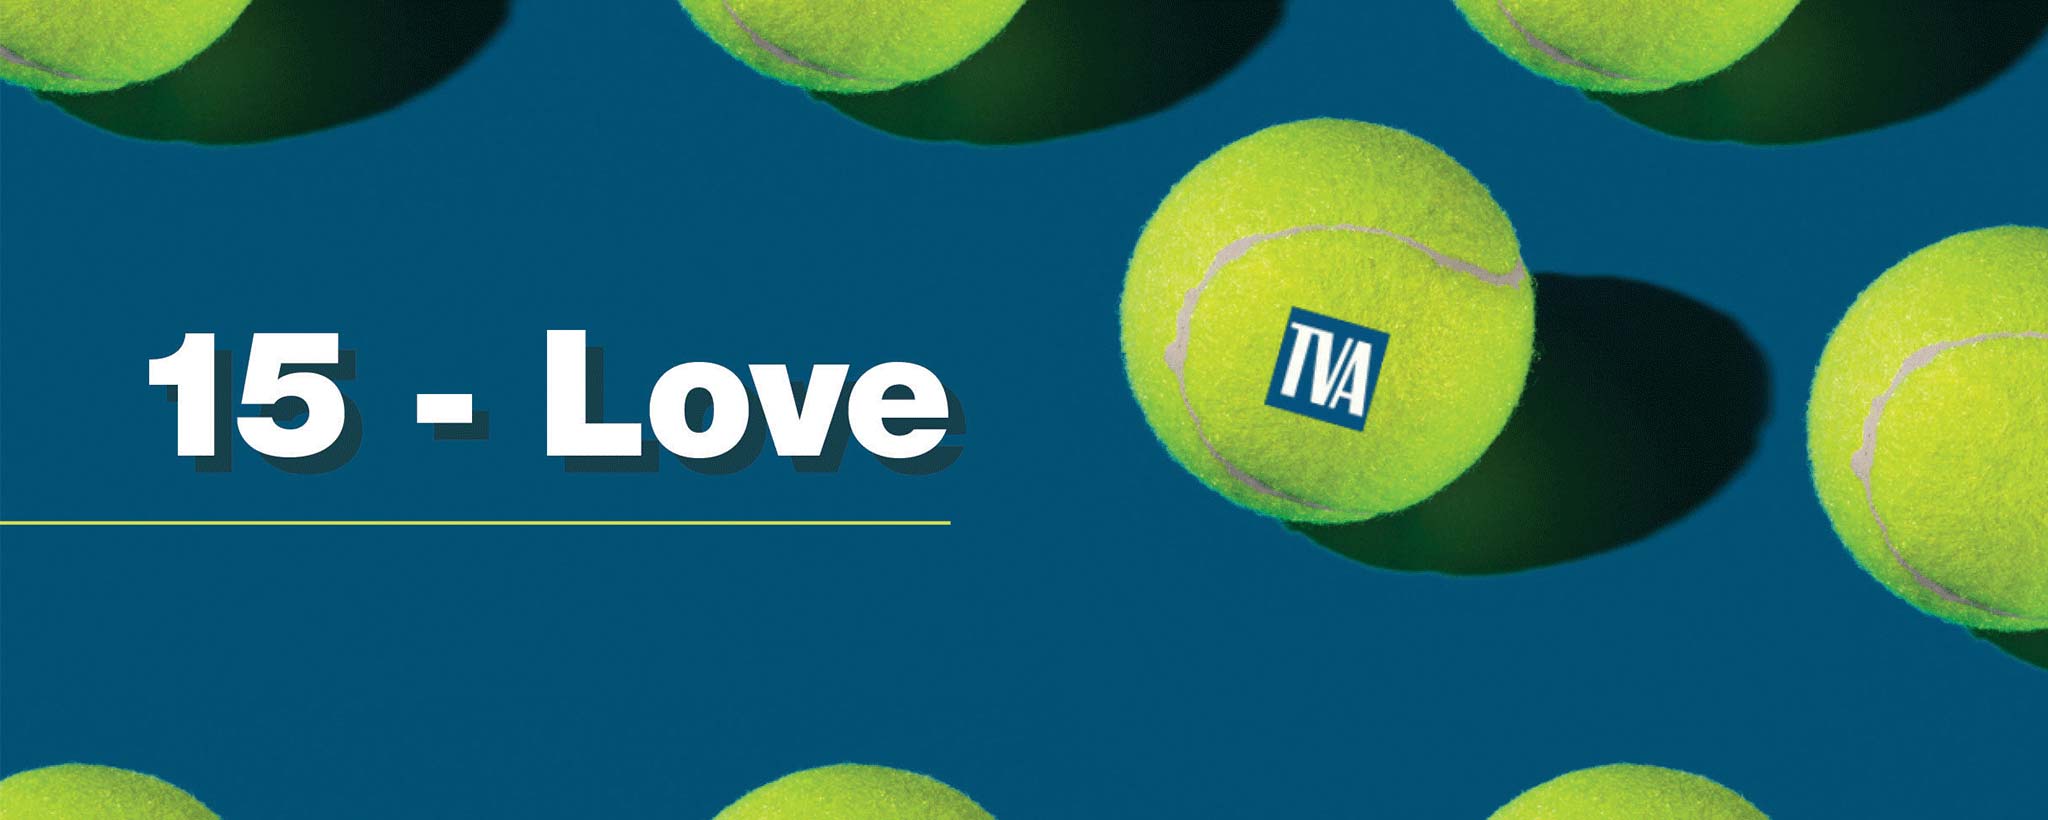 Tennis ball with TVA logo